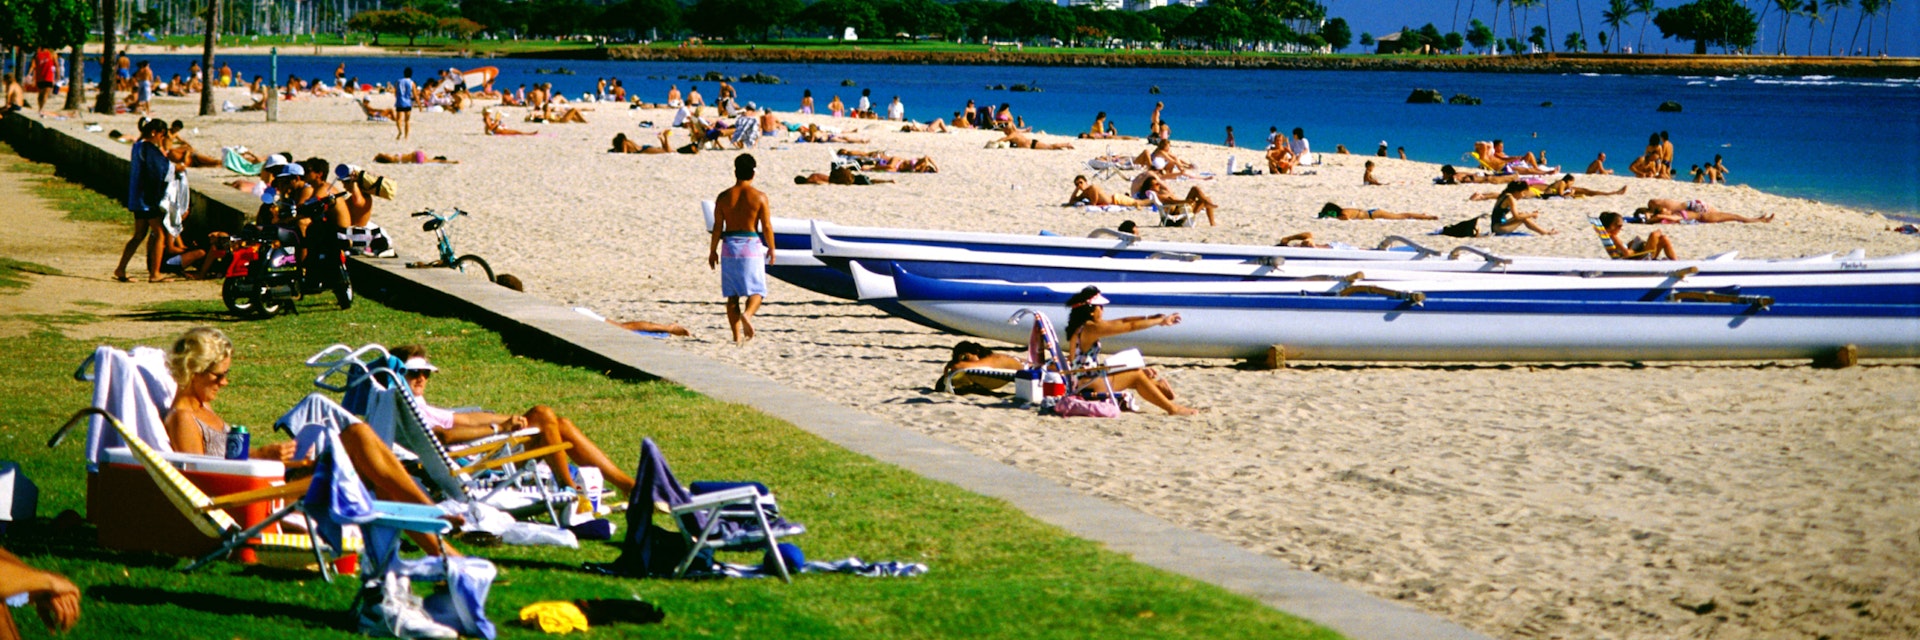 Visitors crowd beaches at Ala Moana Beach Park, Diamond Head background